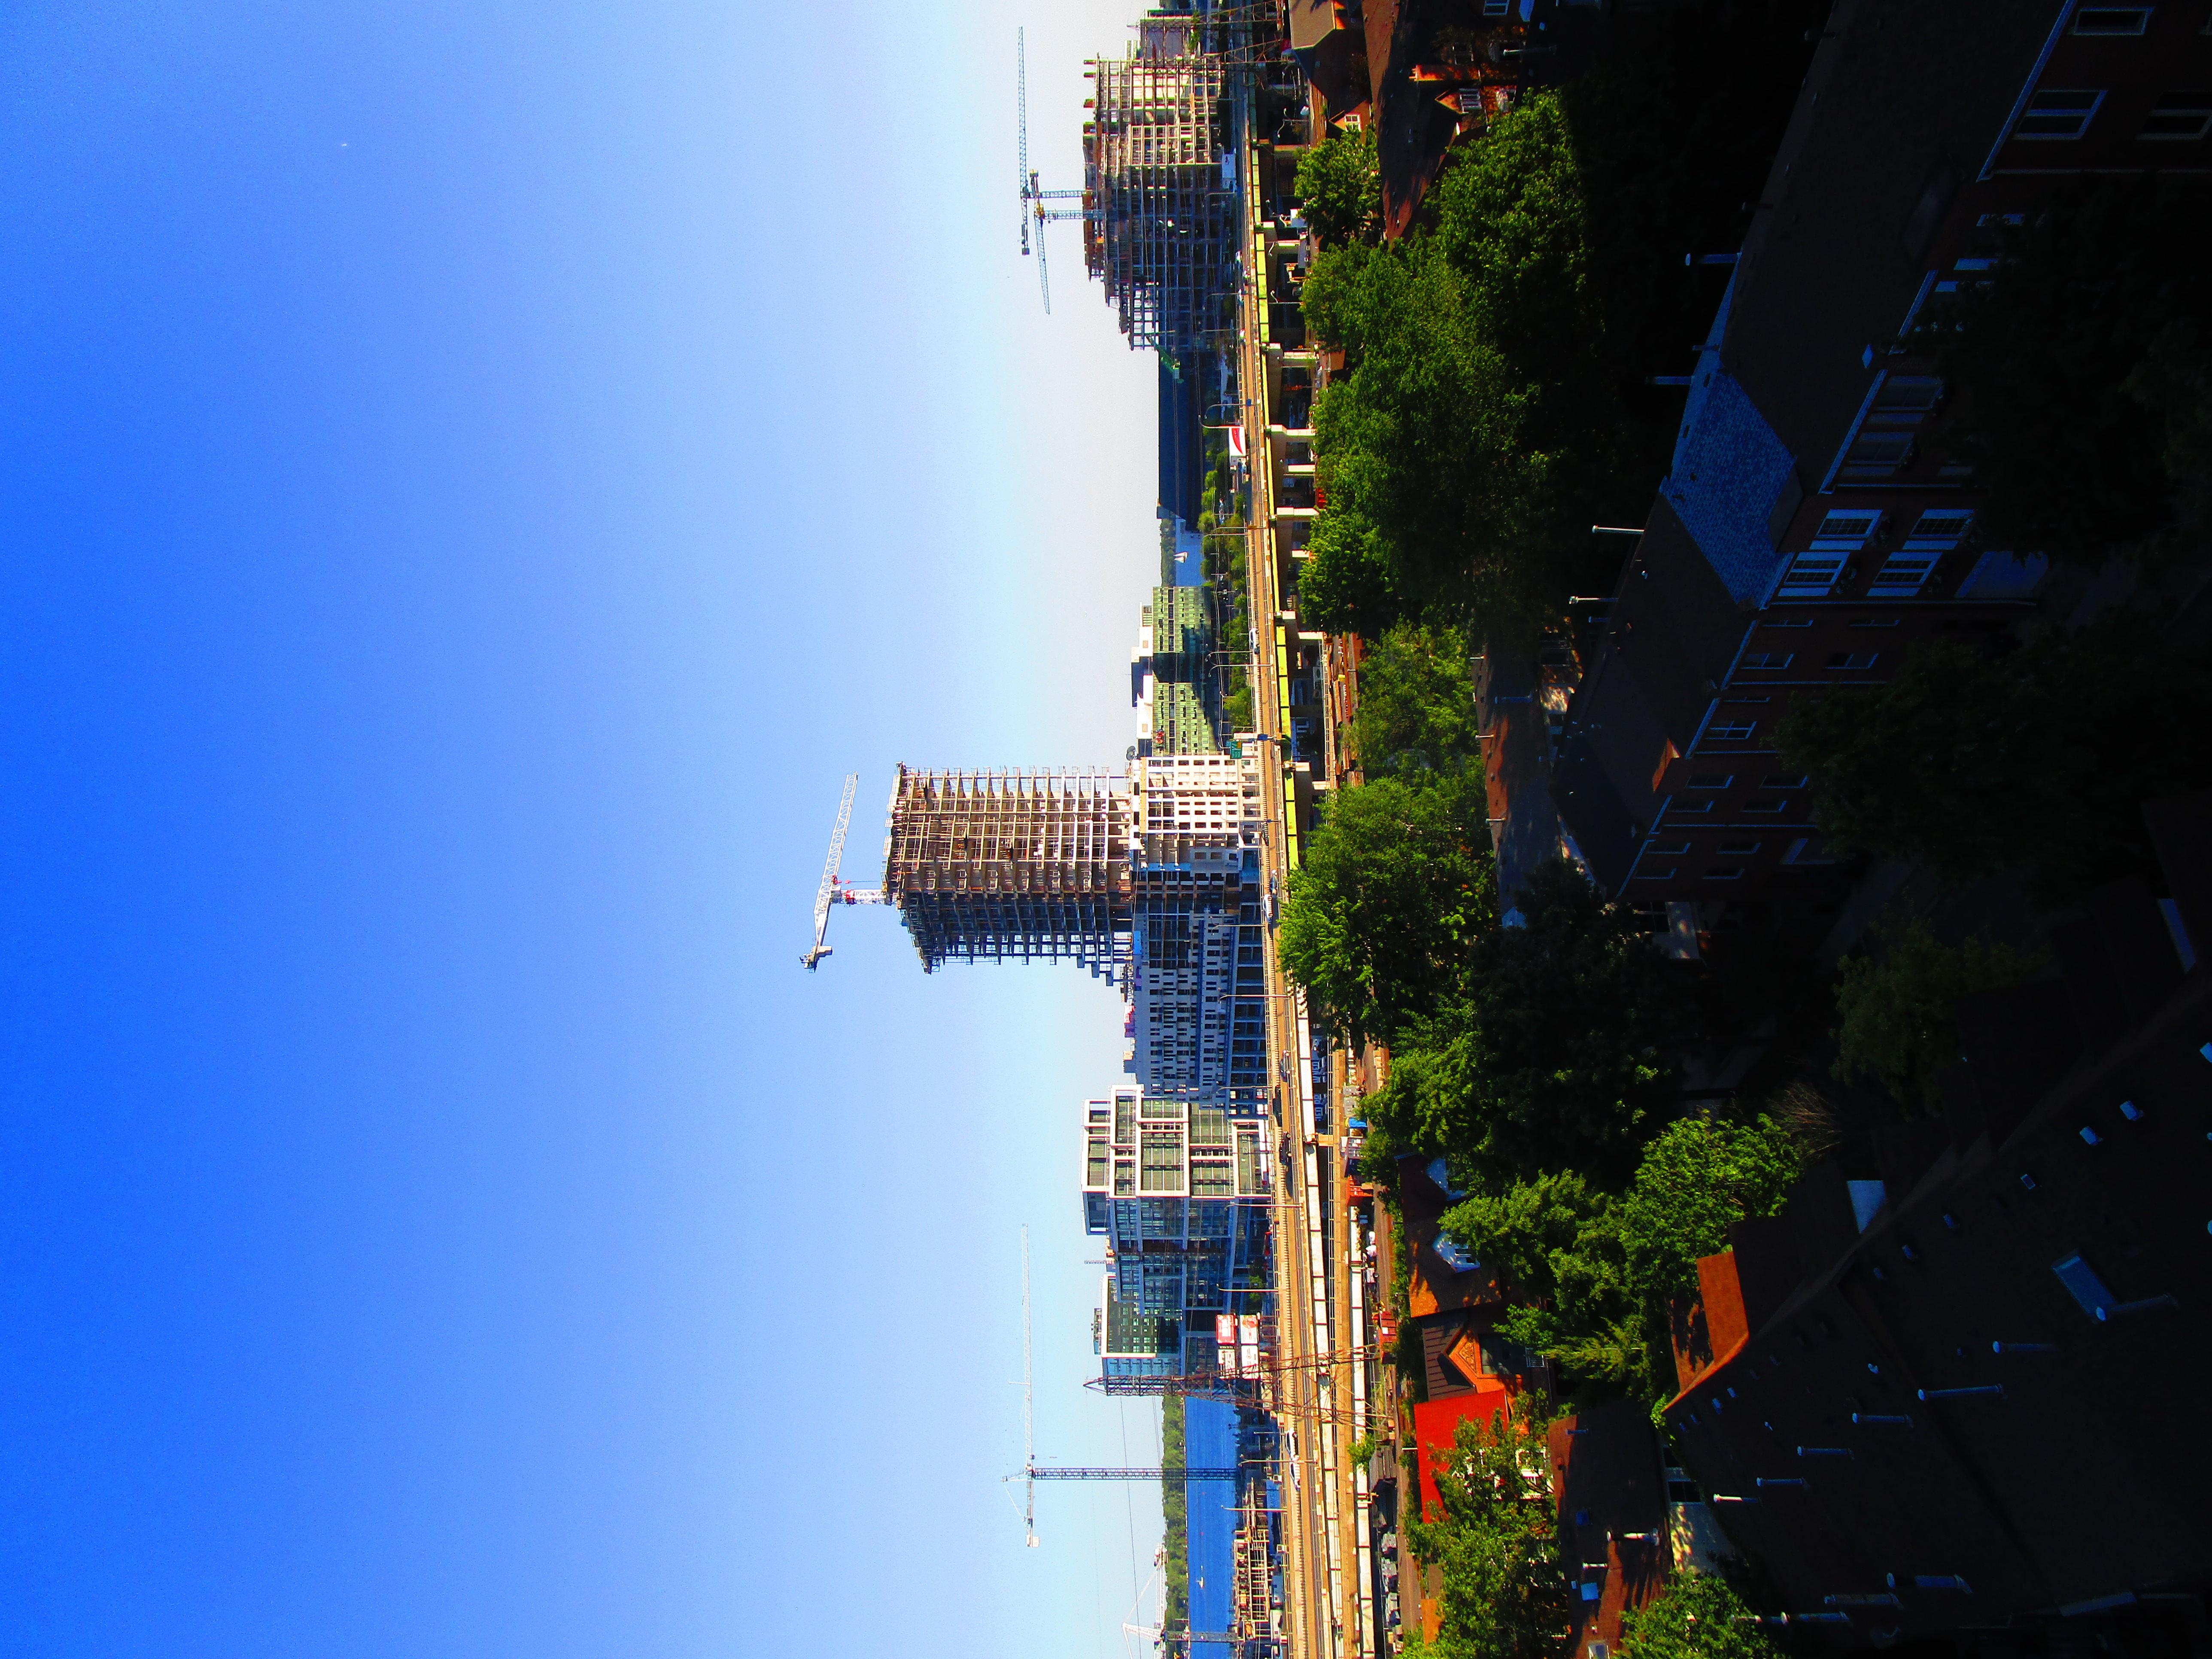 Scanning toronto's skyline, 2017 06 14 c -h photo